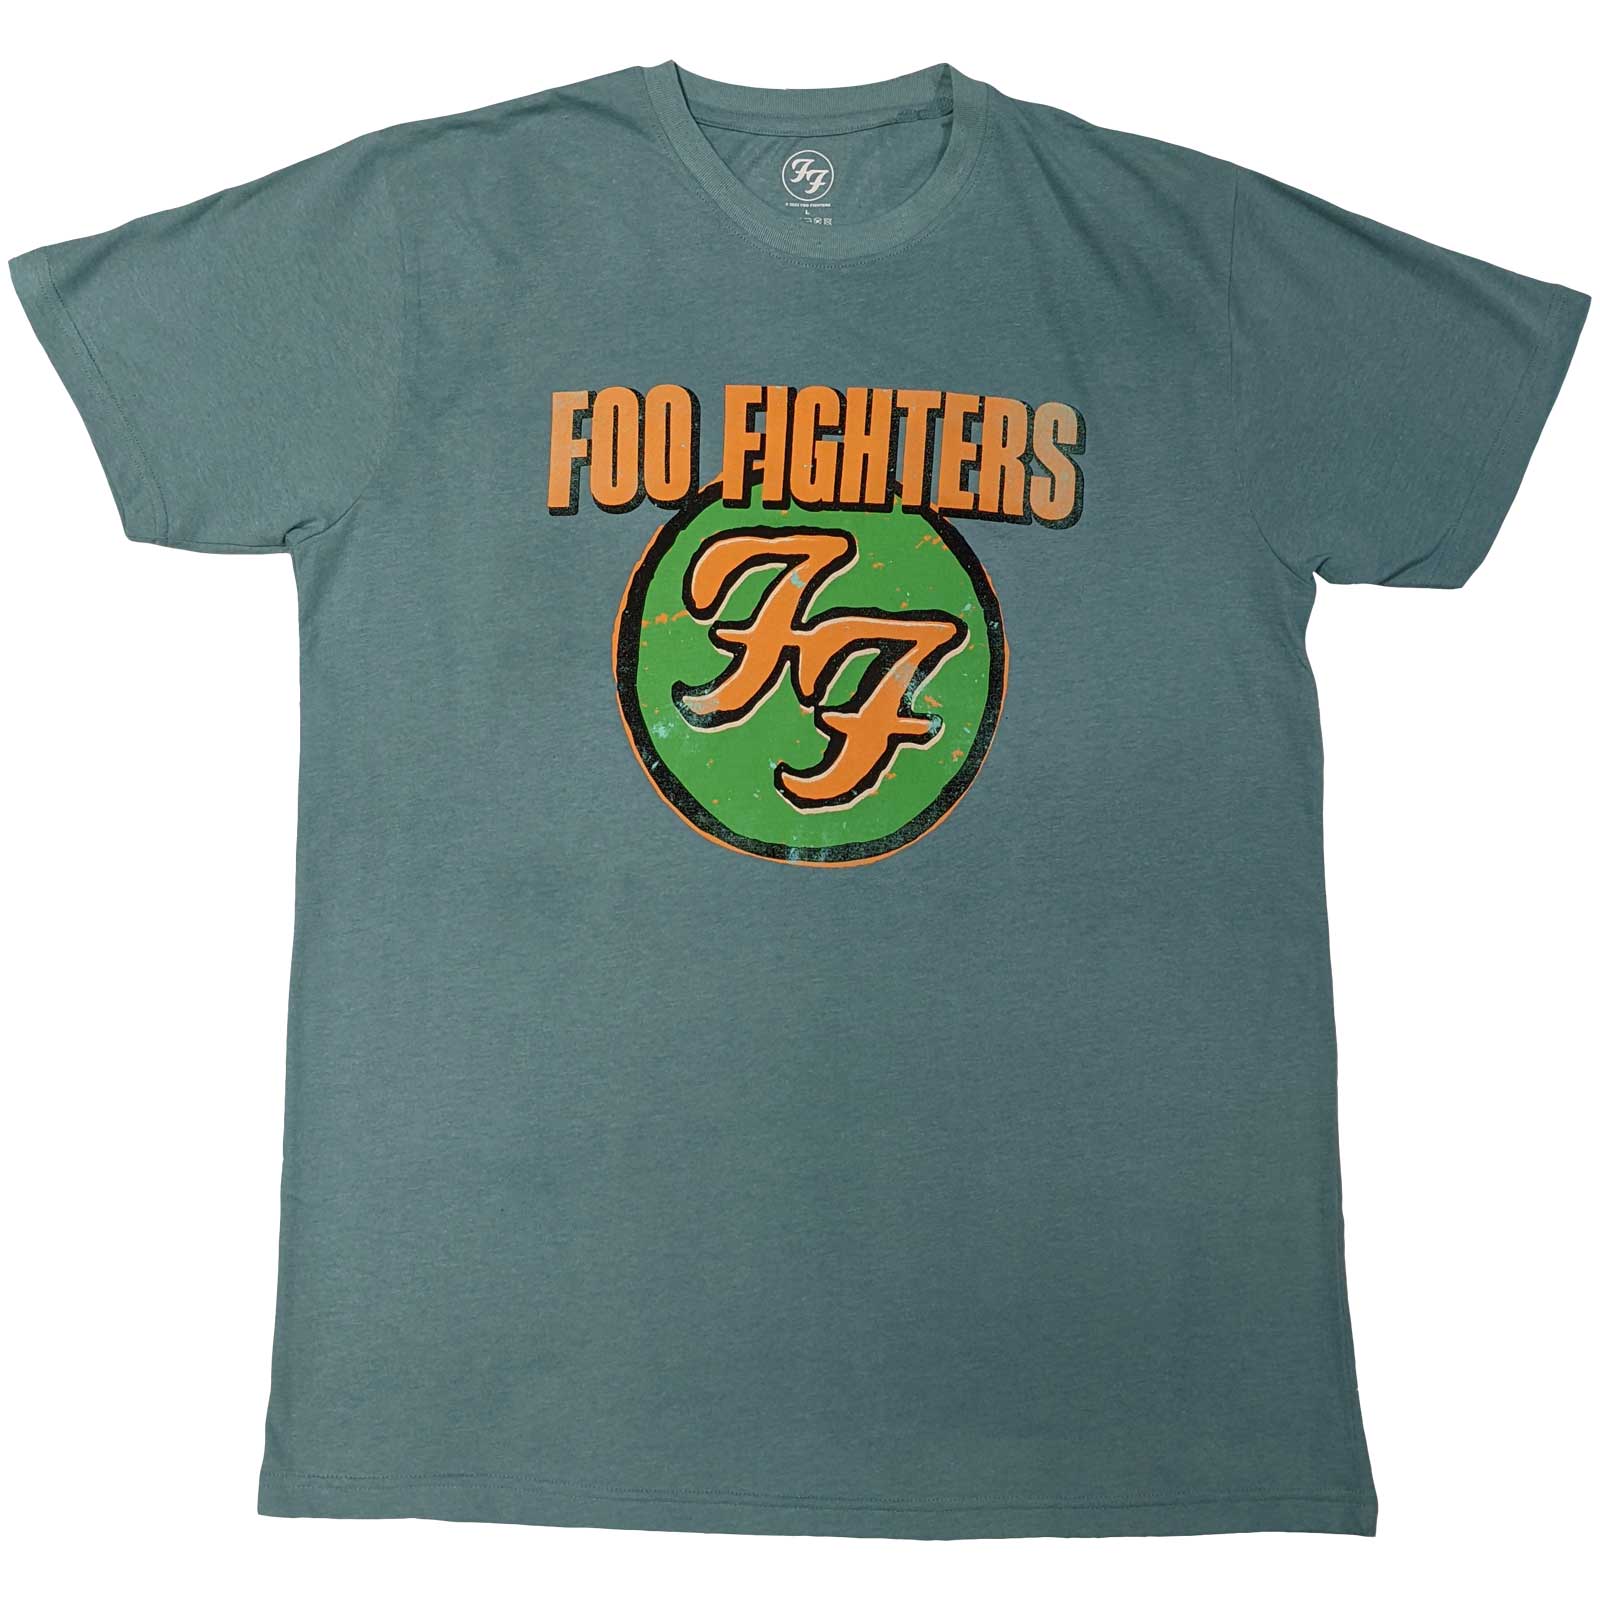 Foo Fighters - Graff